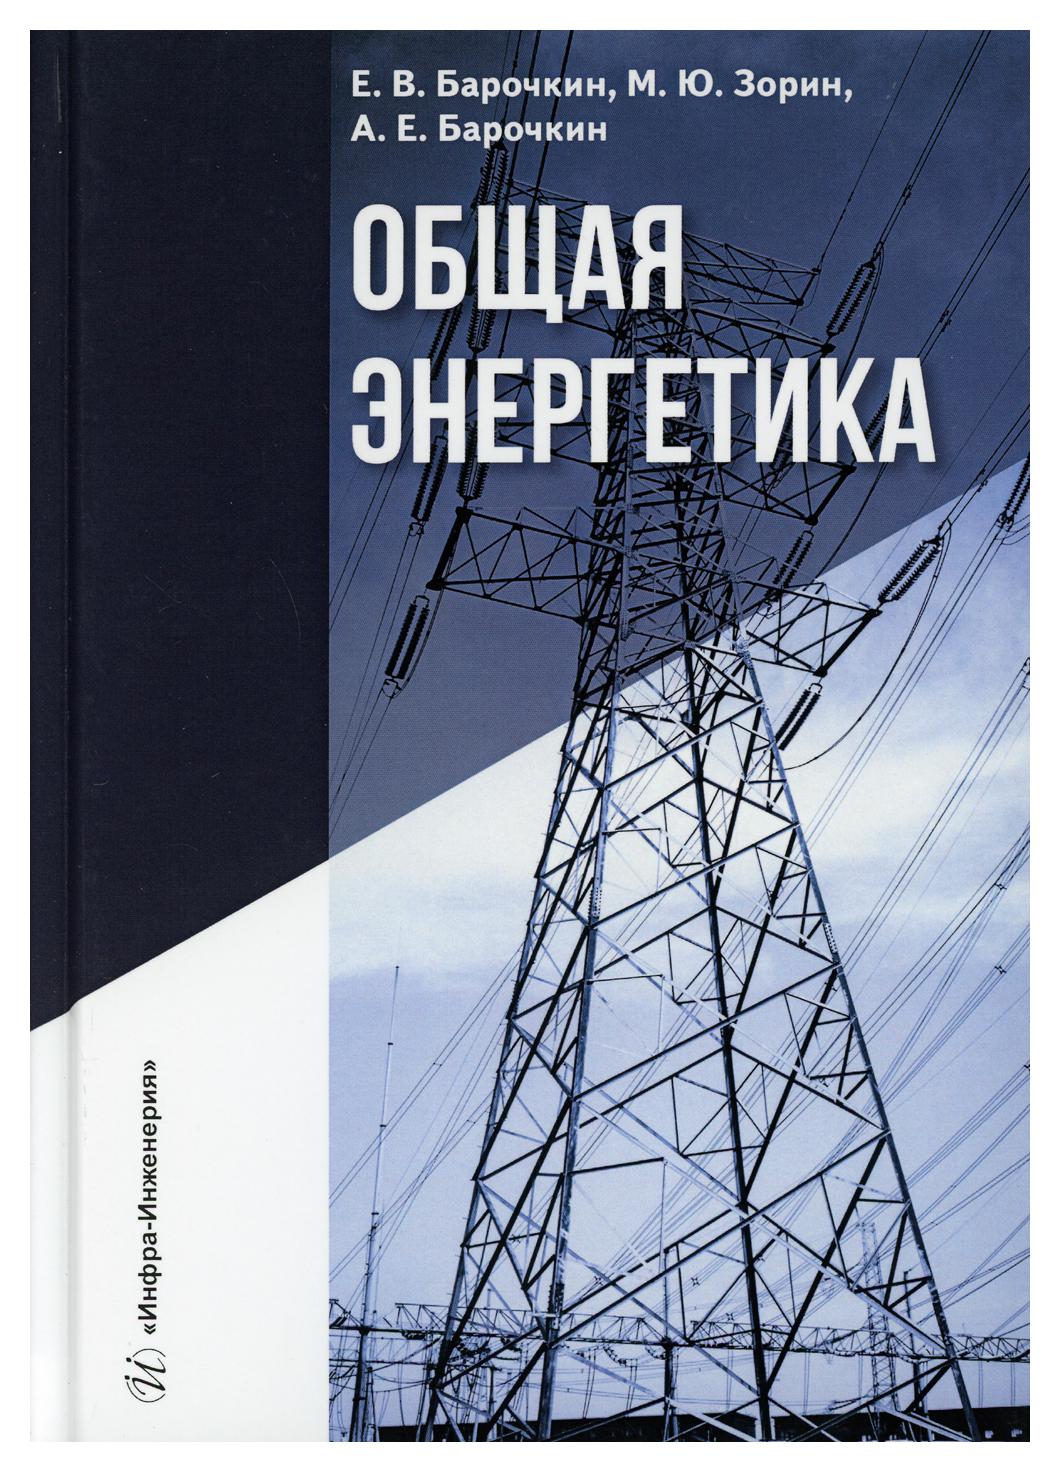 

Книга Общая энергетика